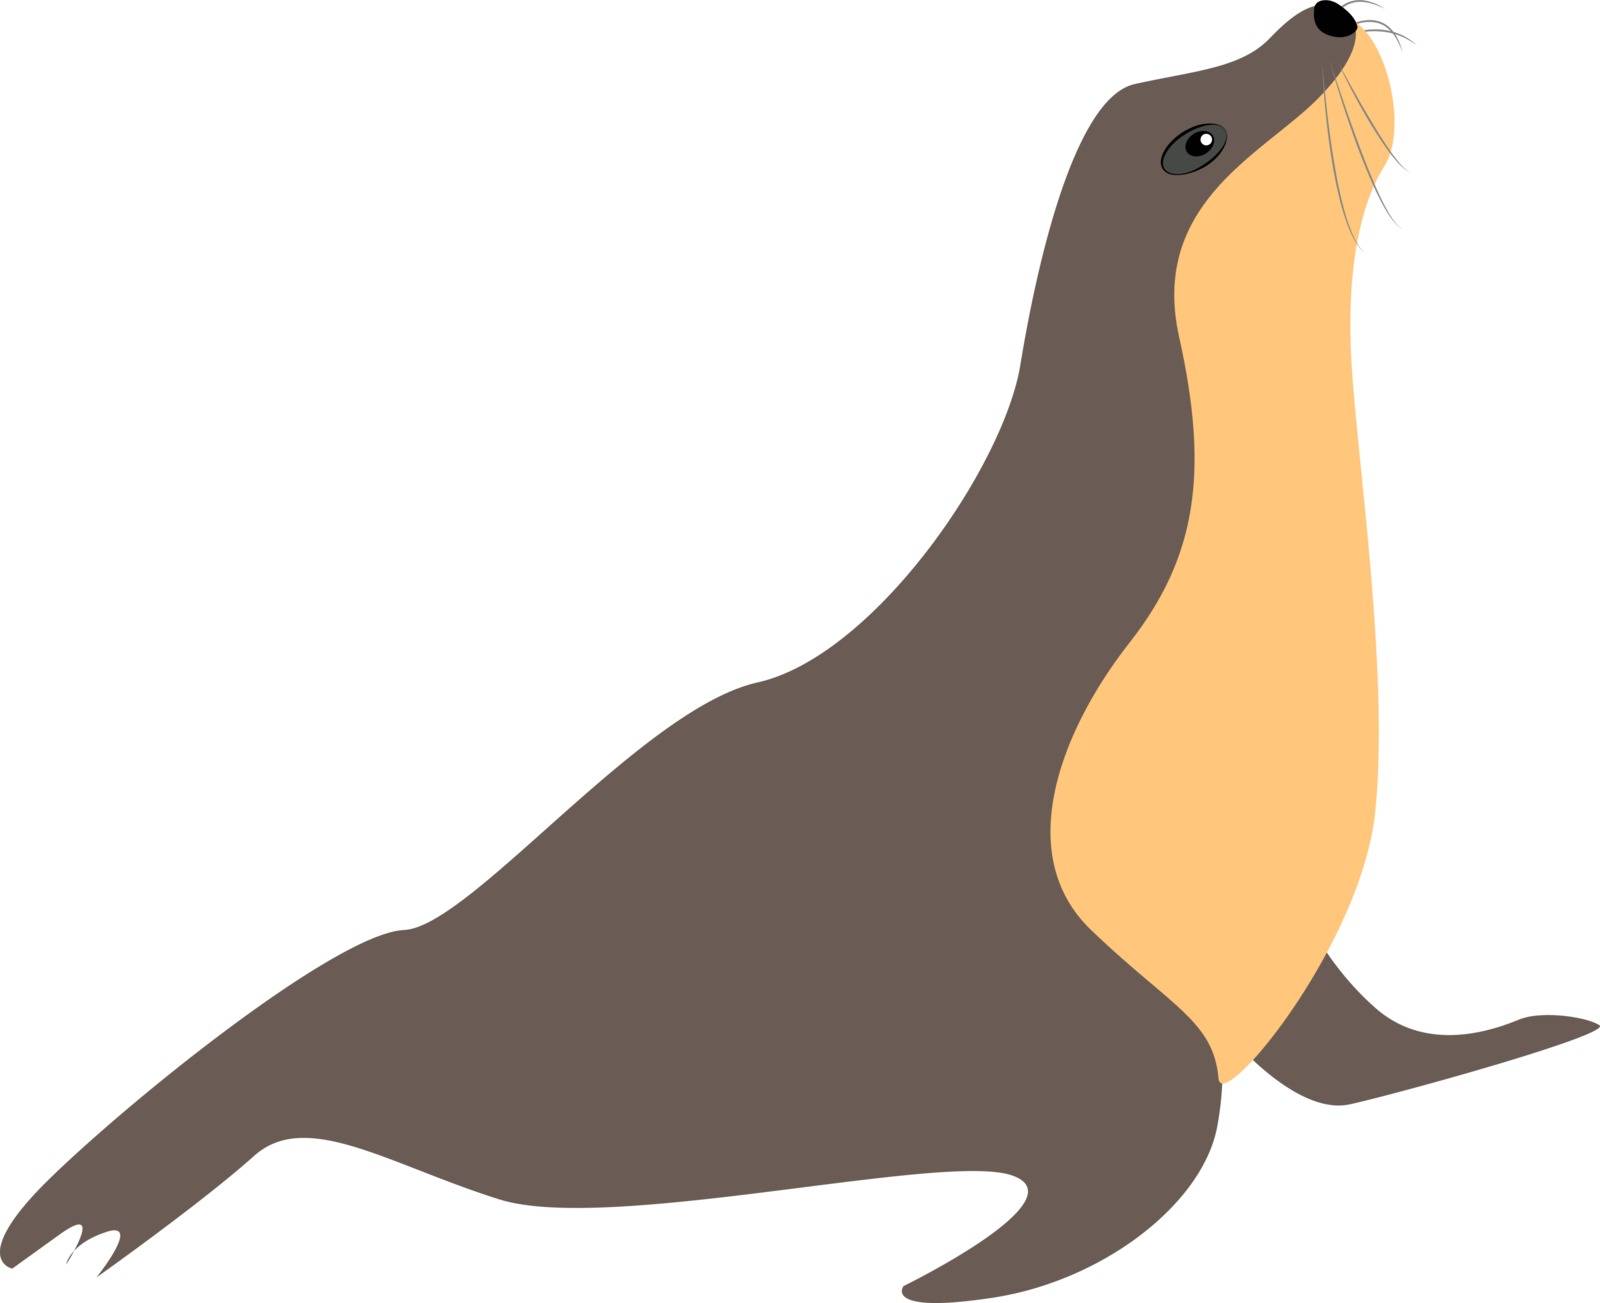 Seal, illustration, vector on white background.